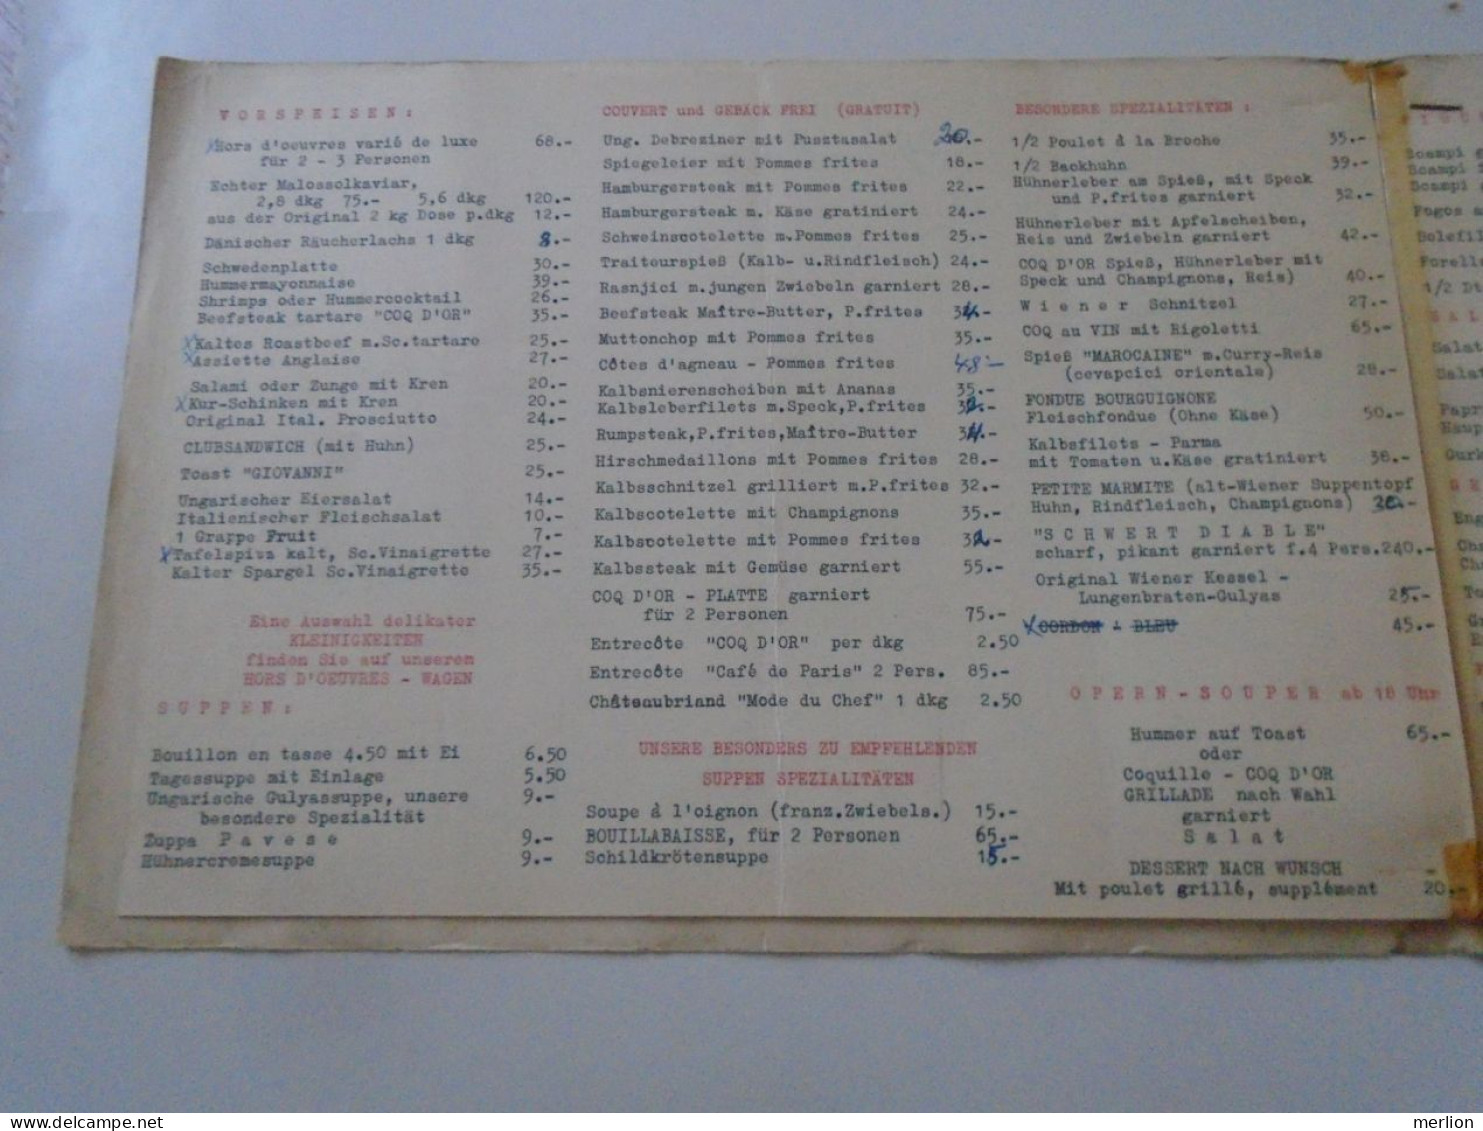 D202252  Menu Speisenkarte Rotisserie Coq d'or  Carlton - Hotel Capricorno  WIEN  I. Führichgasse 1 Österreich ca 1960's